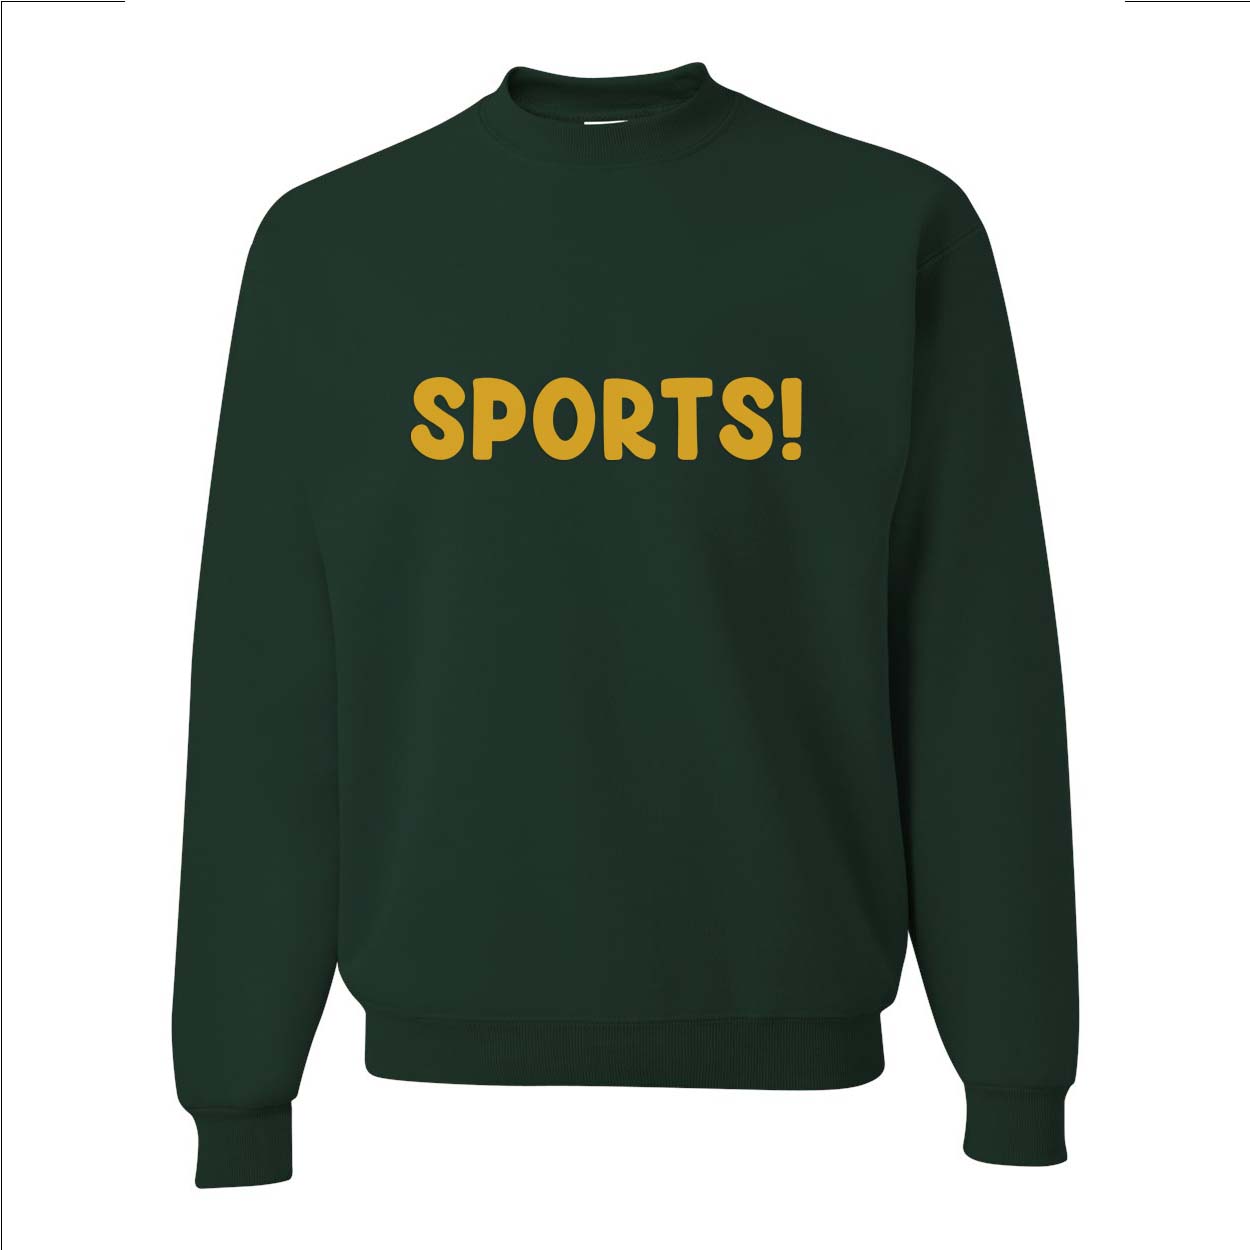 Sports! Sweatshirt